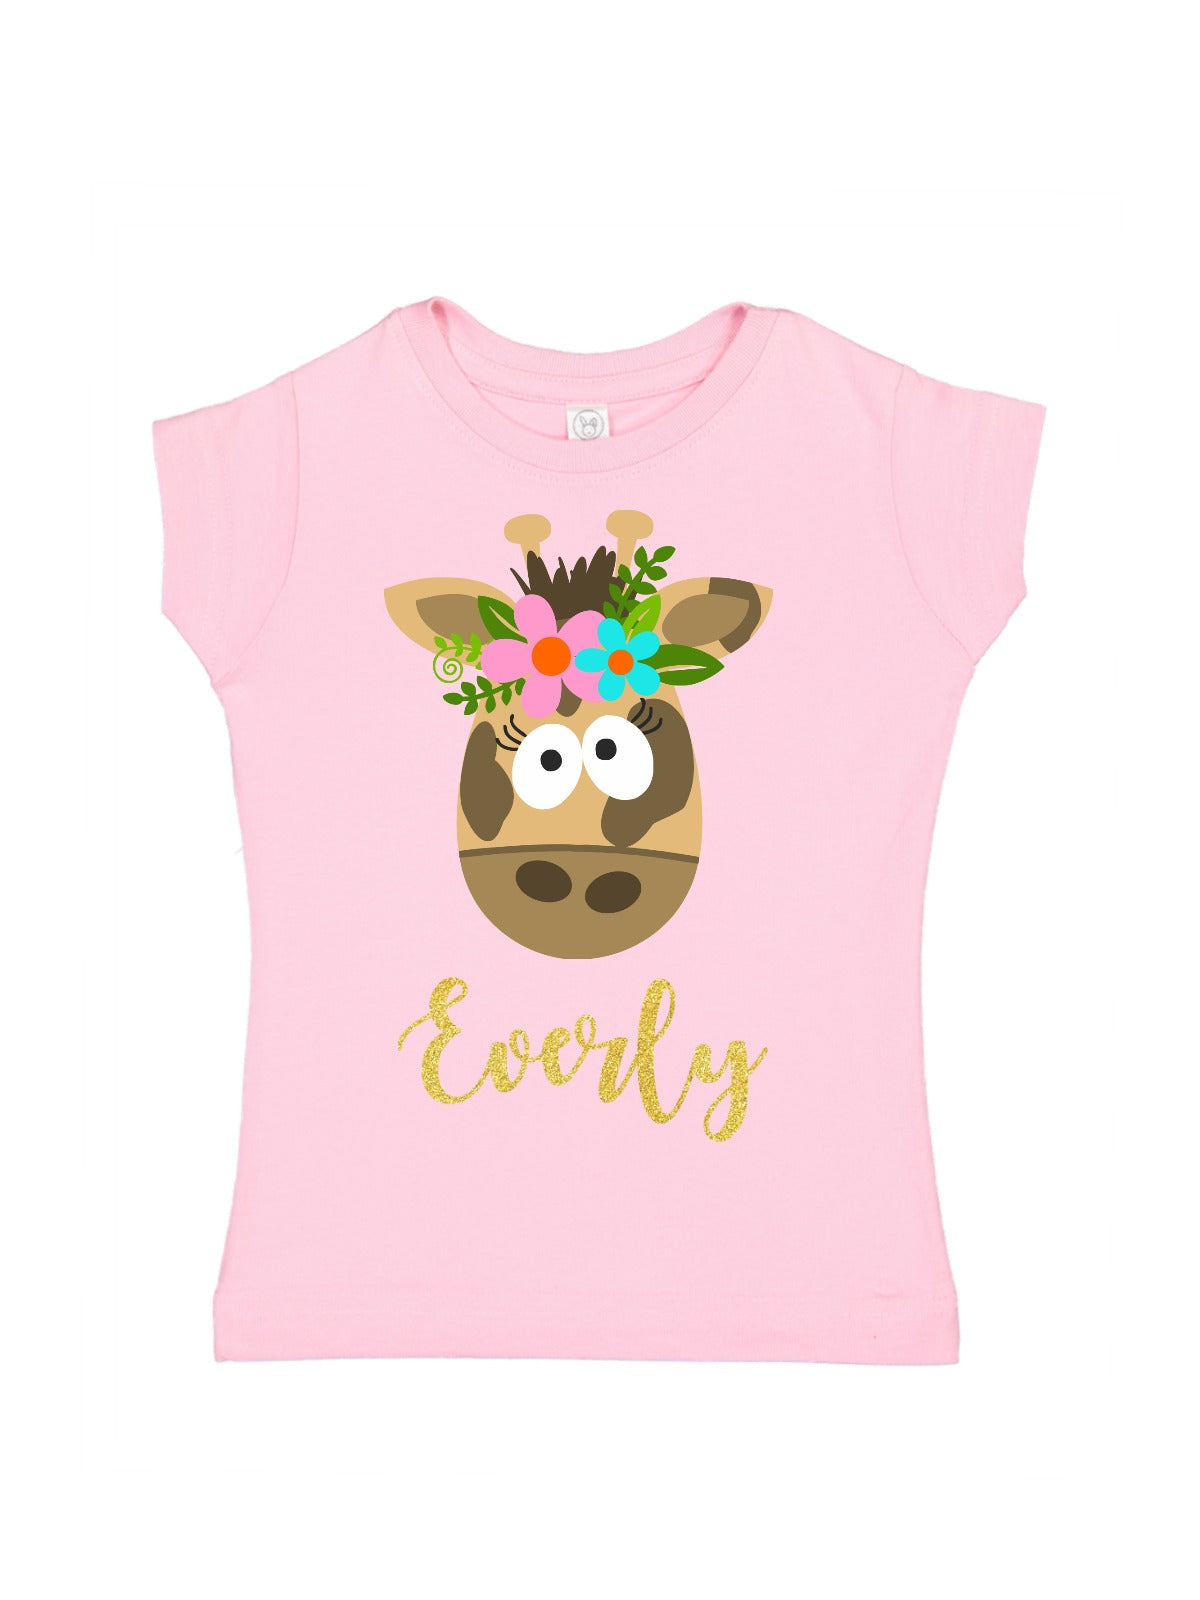 girls personalized pink giraffe in flower crown shirt